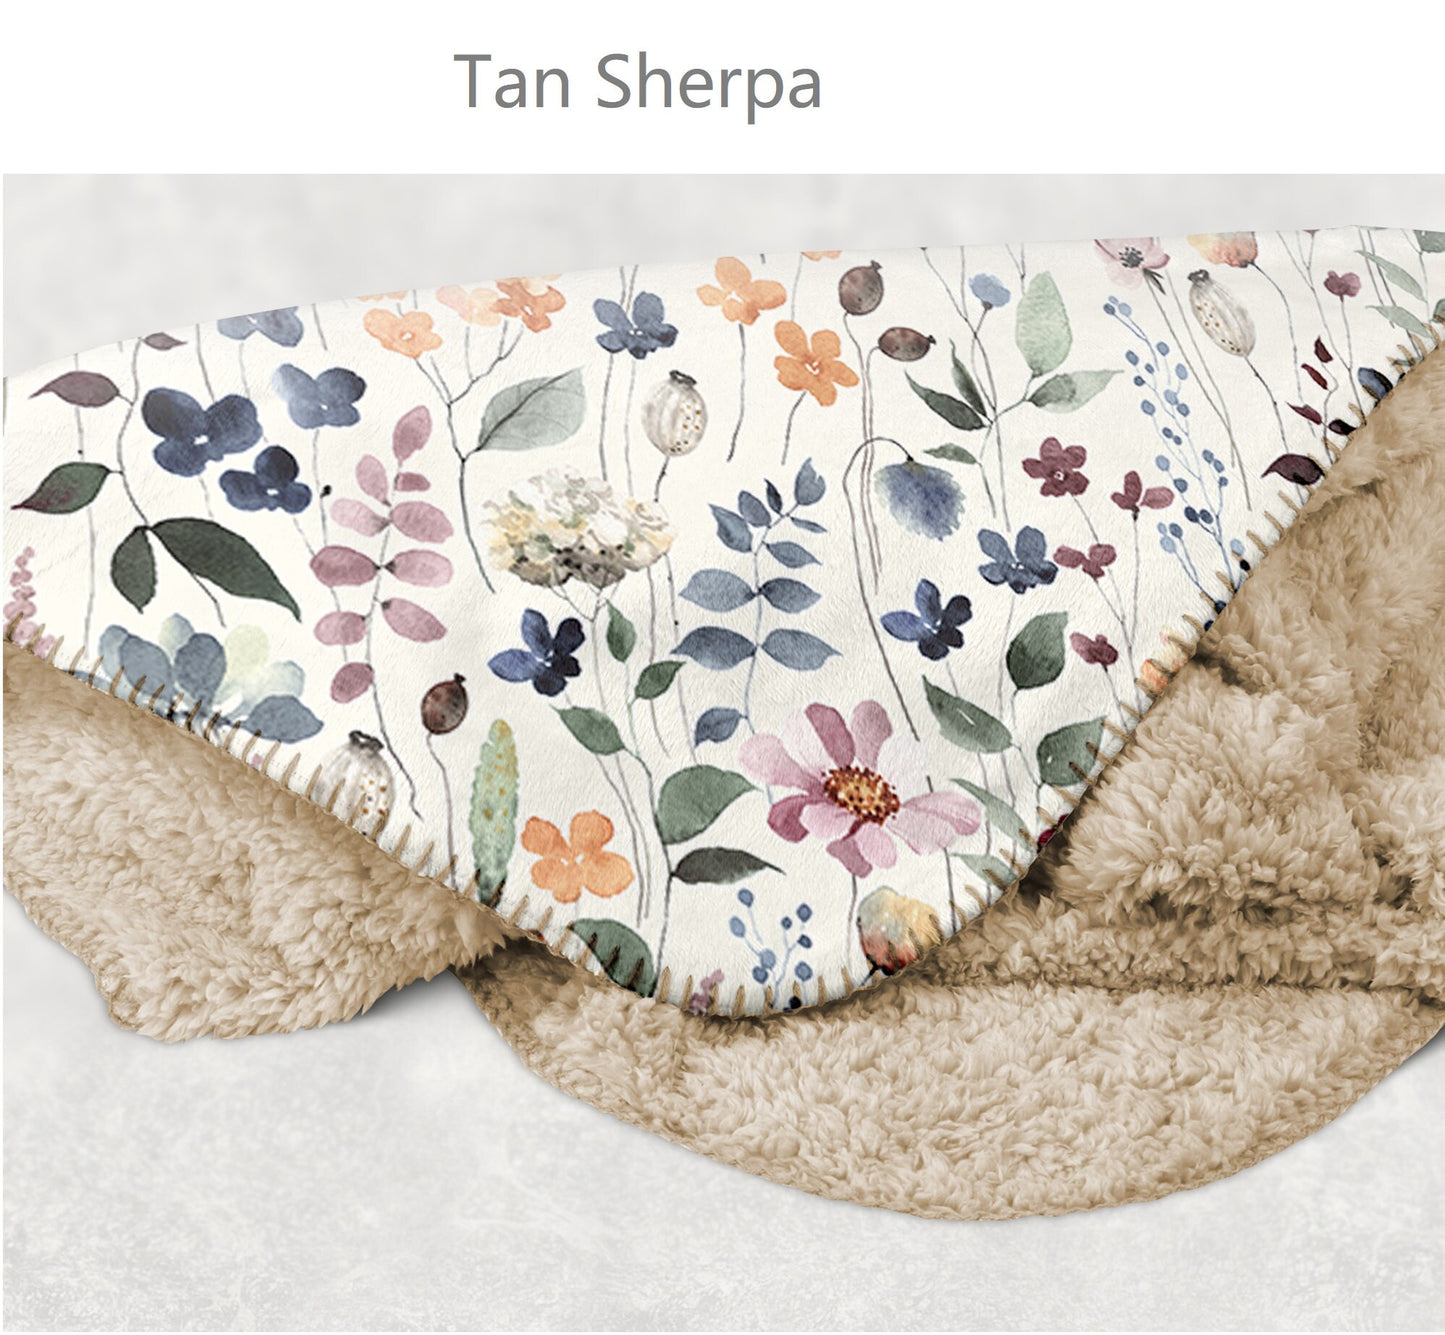 Retro Rainbow pattern personalize name blanket, Minky or Sherpa custom blanket, Baby blanket, birthday gift idea